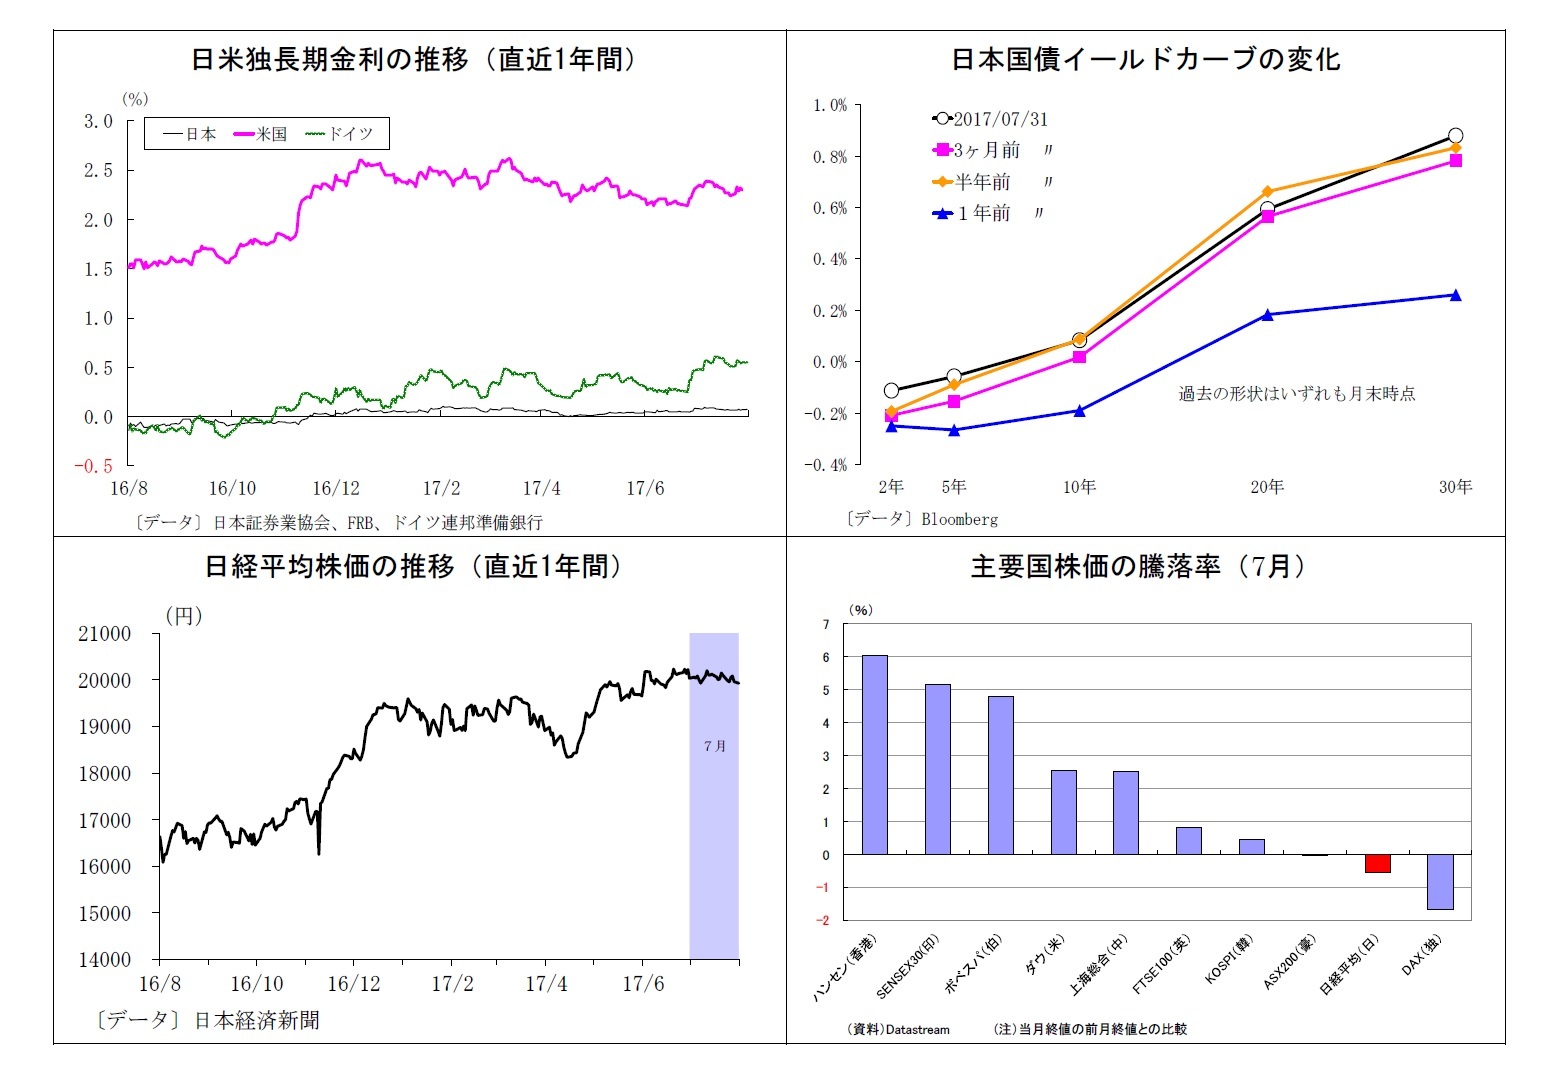 日米独長期金利の推移（直近1年間）/日本国債イールドカーブの変化/日経平均株価の推移（直近1年間）/主要国株価の騰落率（7月）